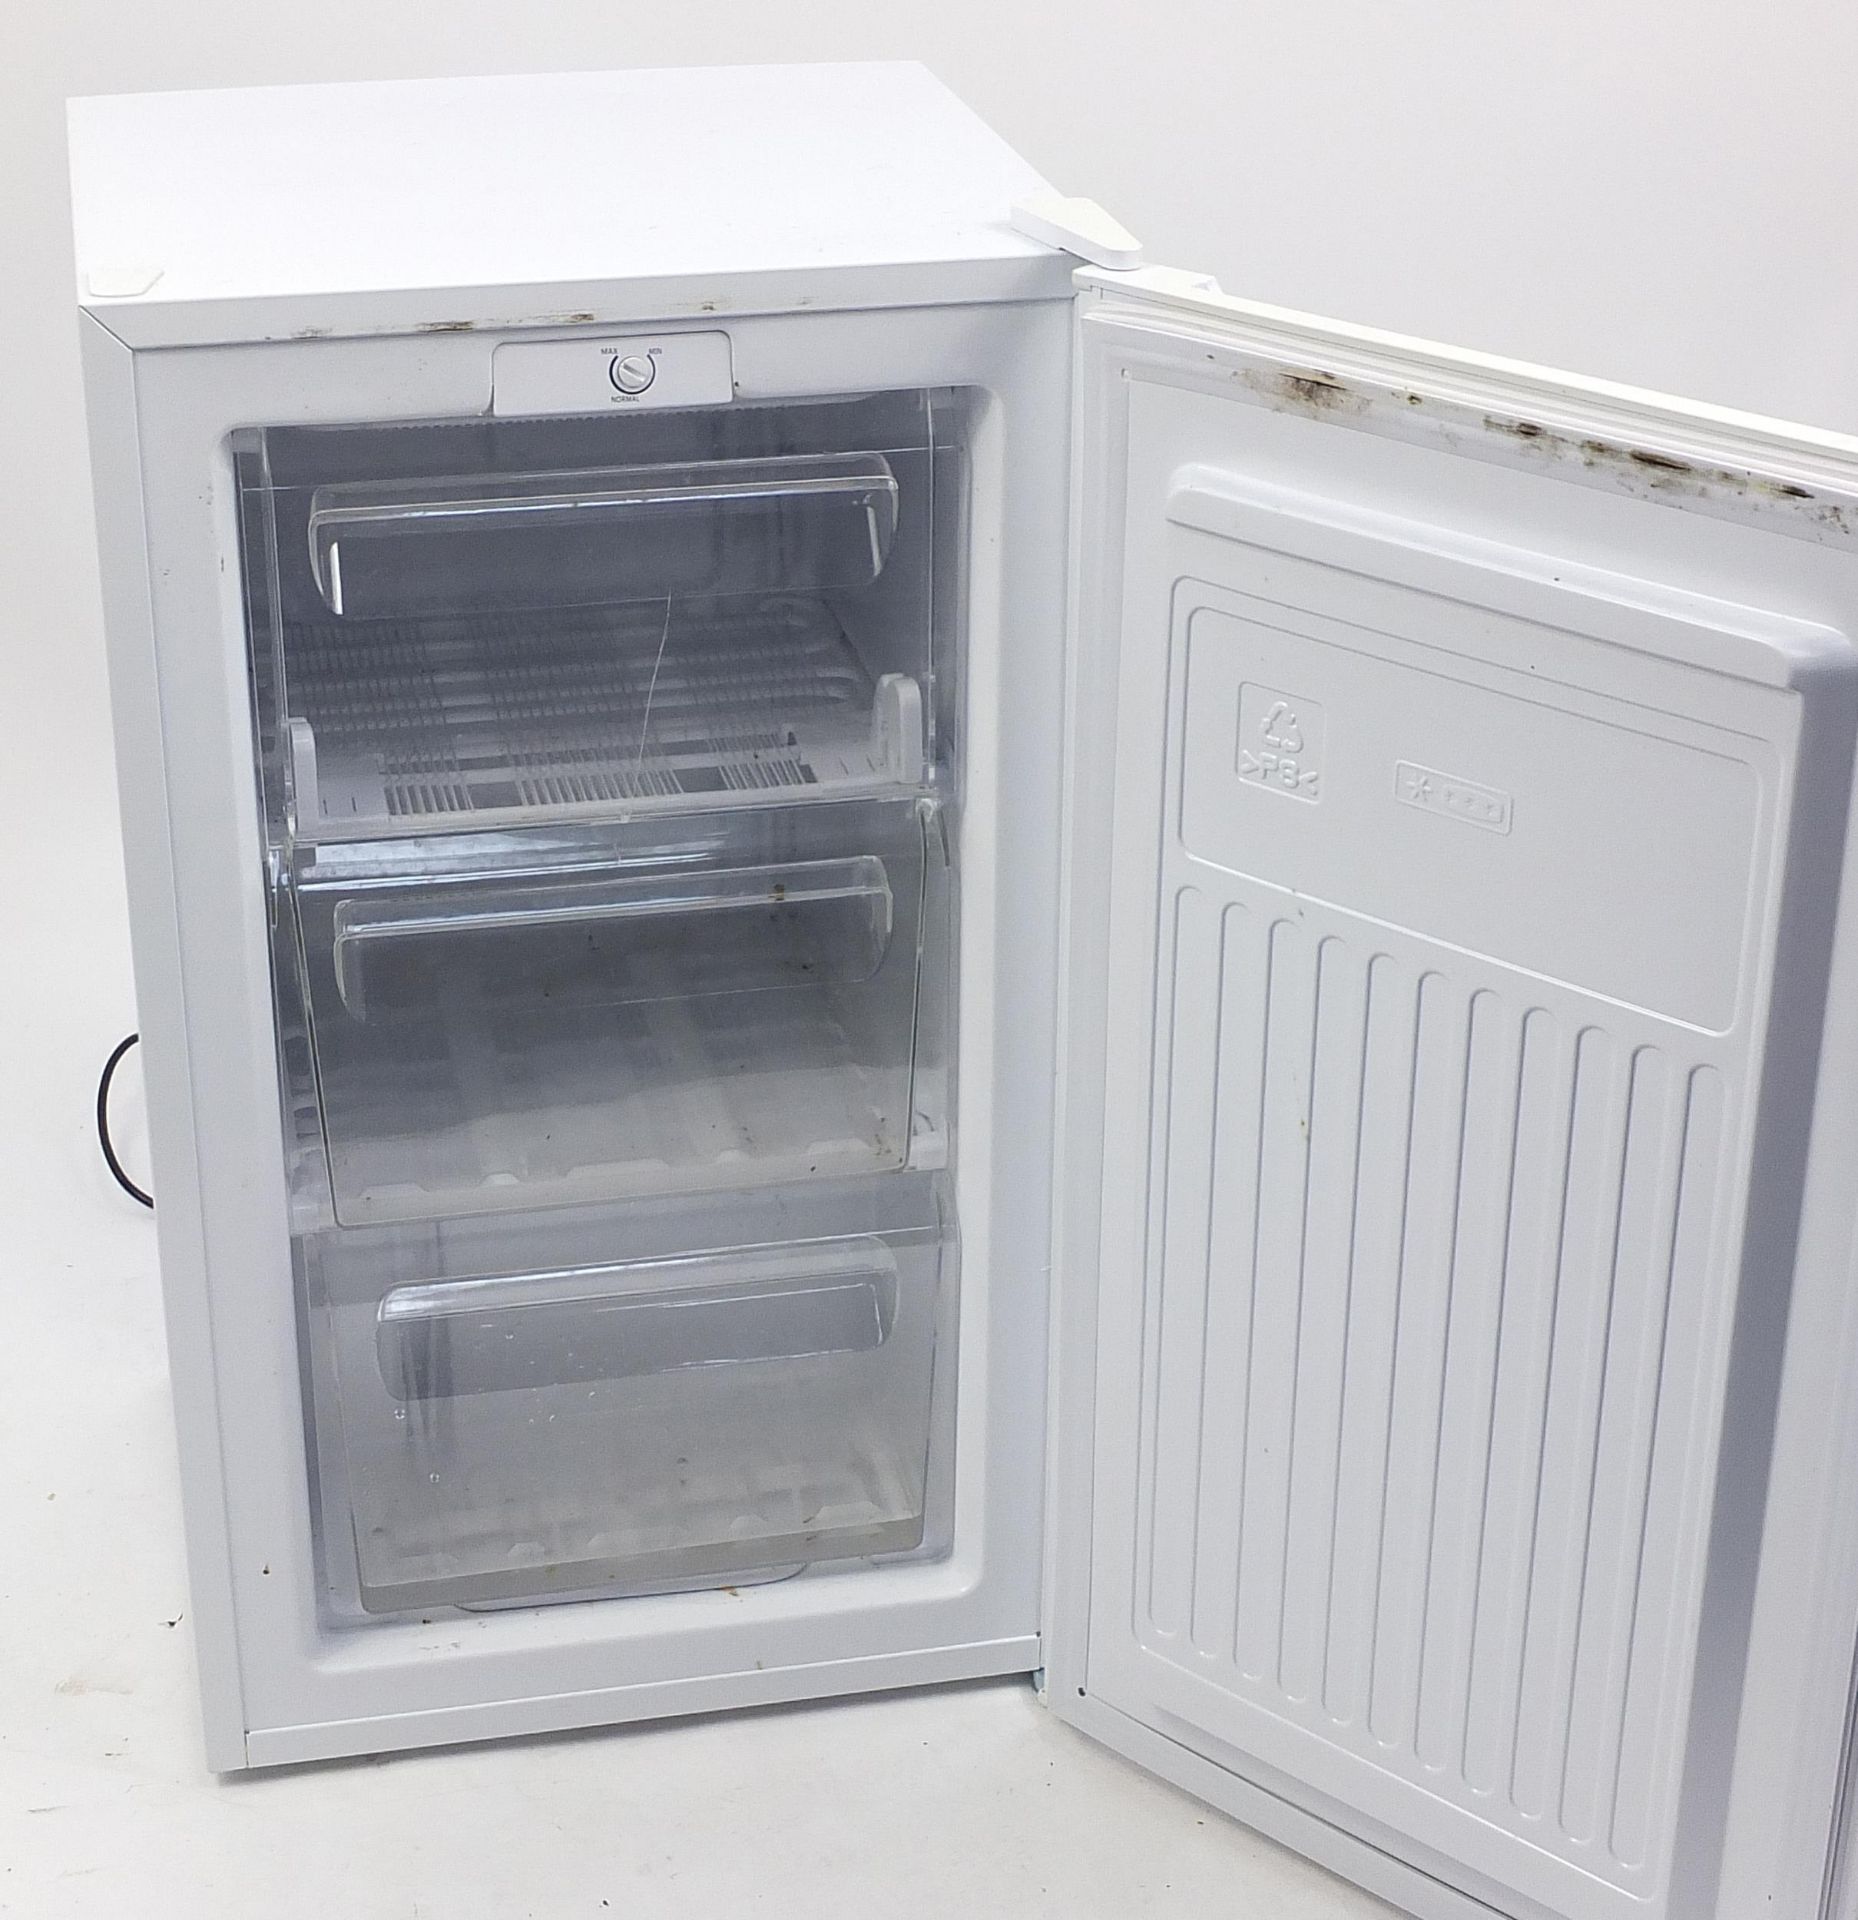 Undercounter freezer, 84cm H x 50cm W x 50cm D - Image 3 of 4